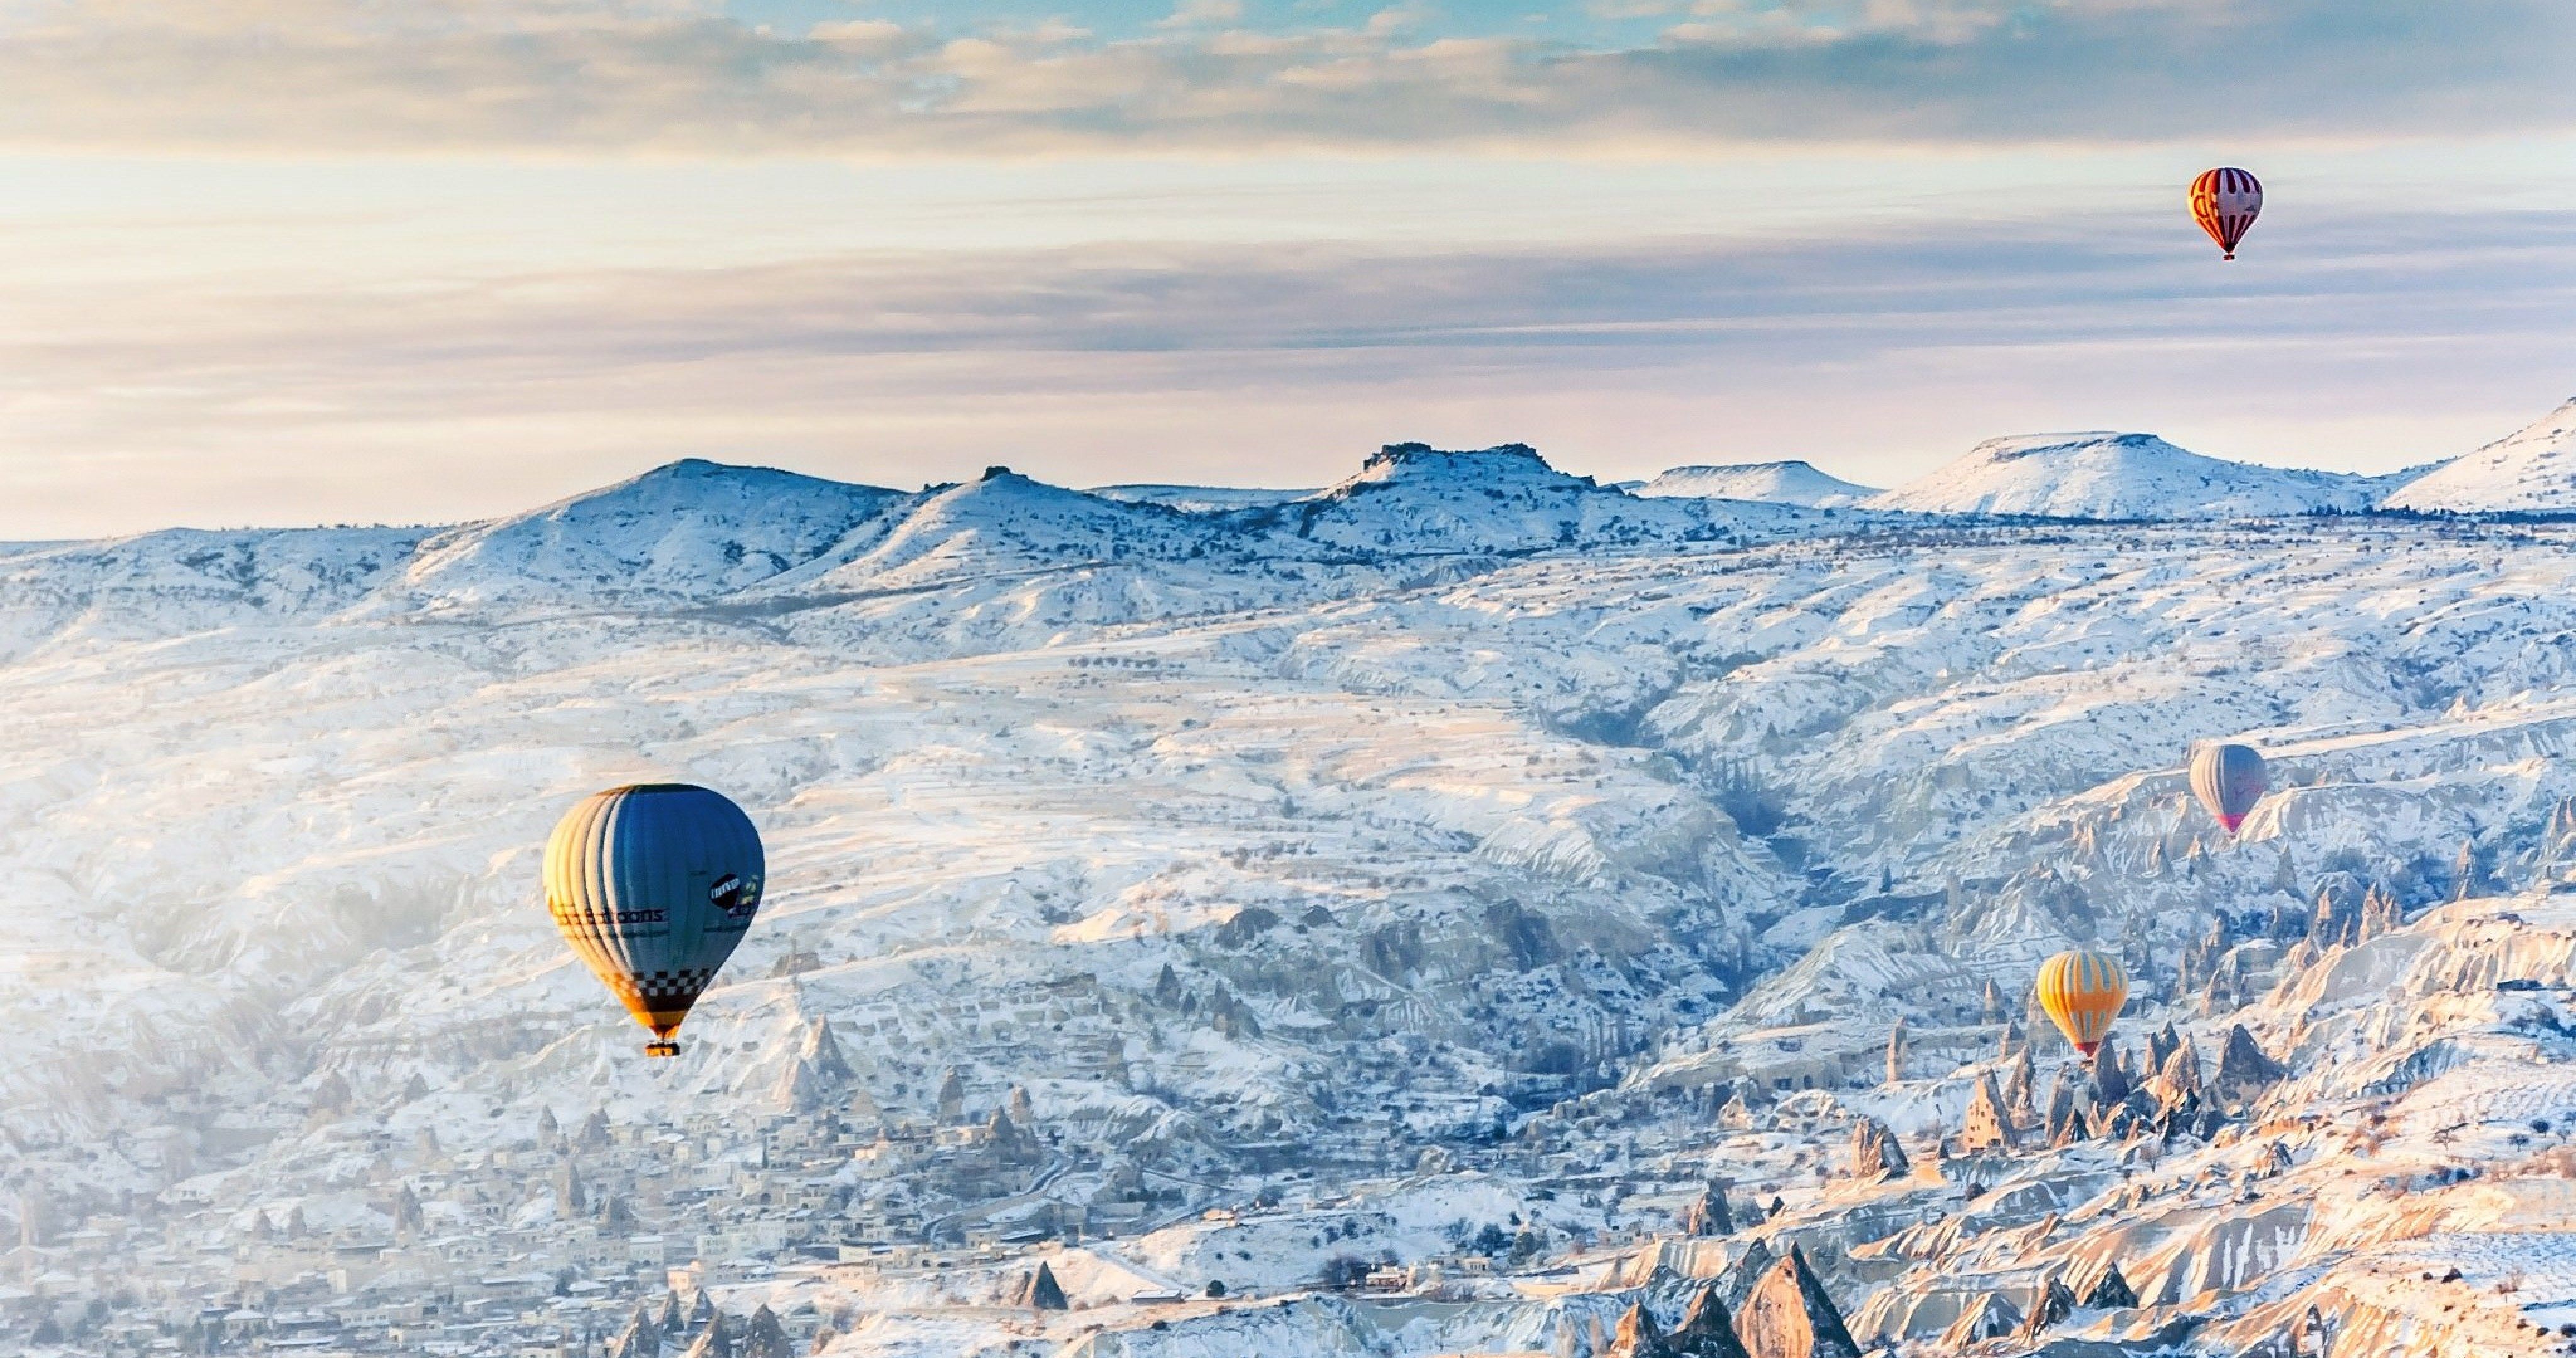 Cappadocia Hot Air Balloon 4k Ultra HD Wallpaper Ololoshenka